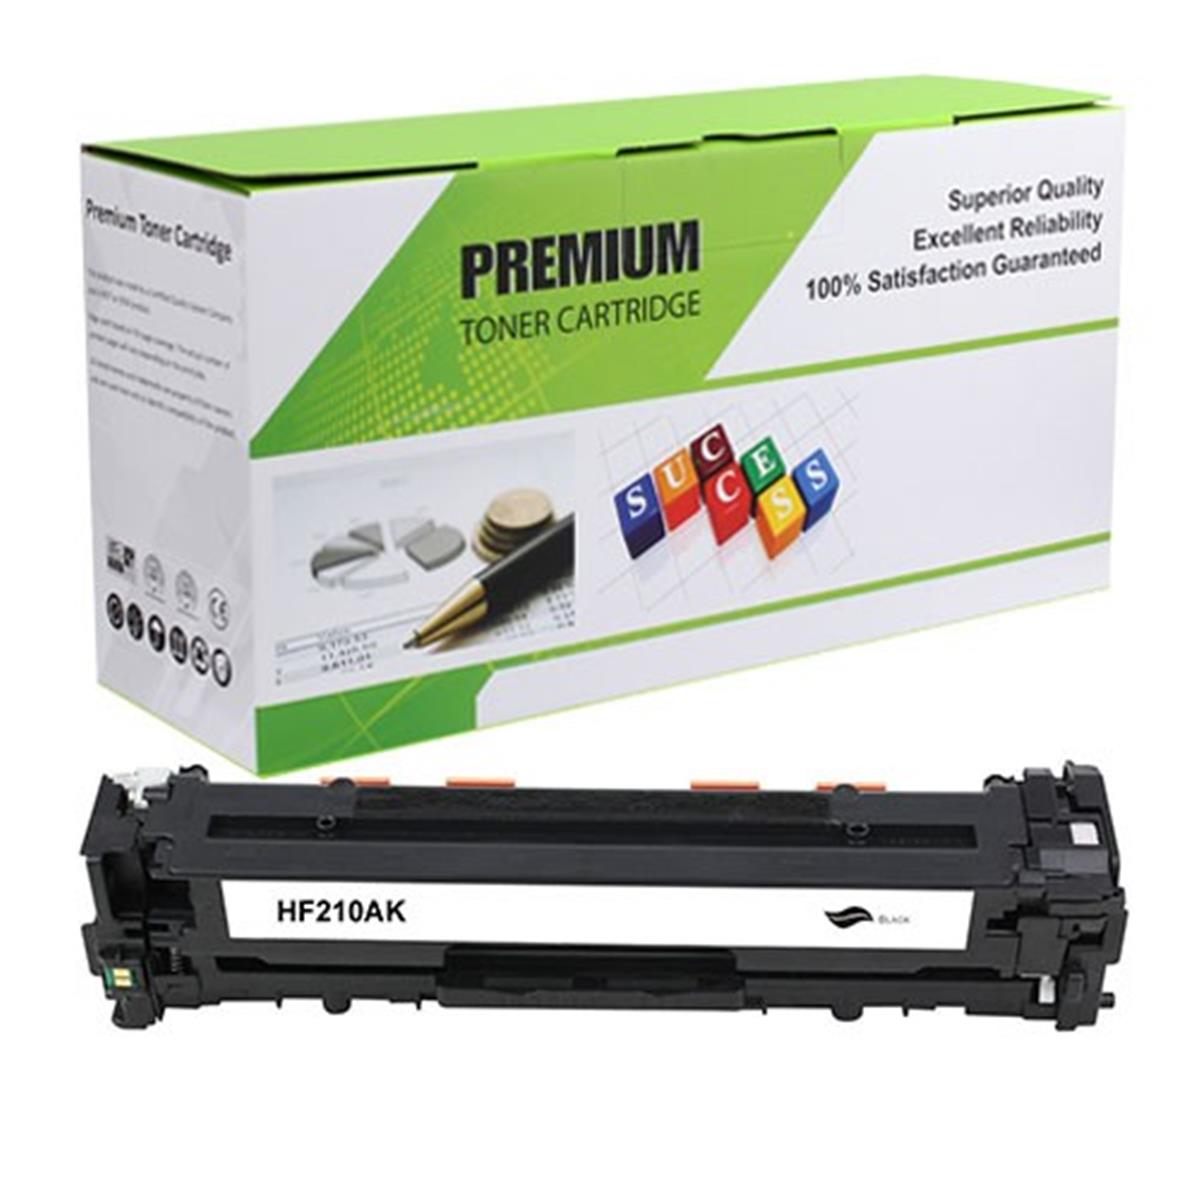 AC-HF210AK Universal Compatible Toner Cartridge for CF210A Printer, Black -  HP